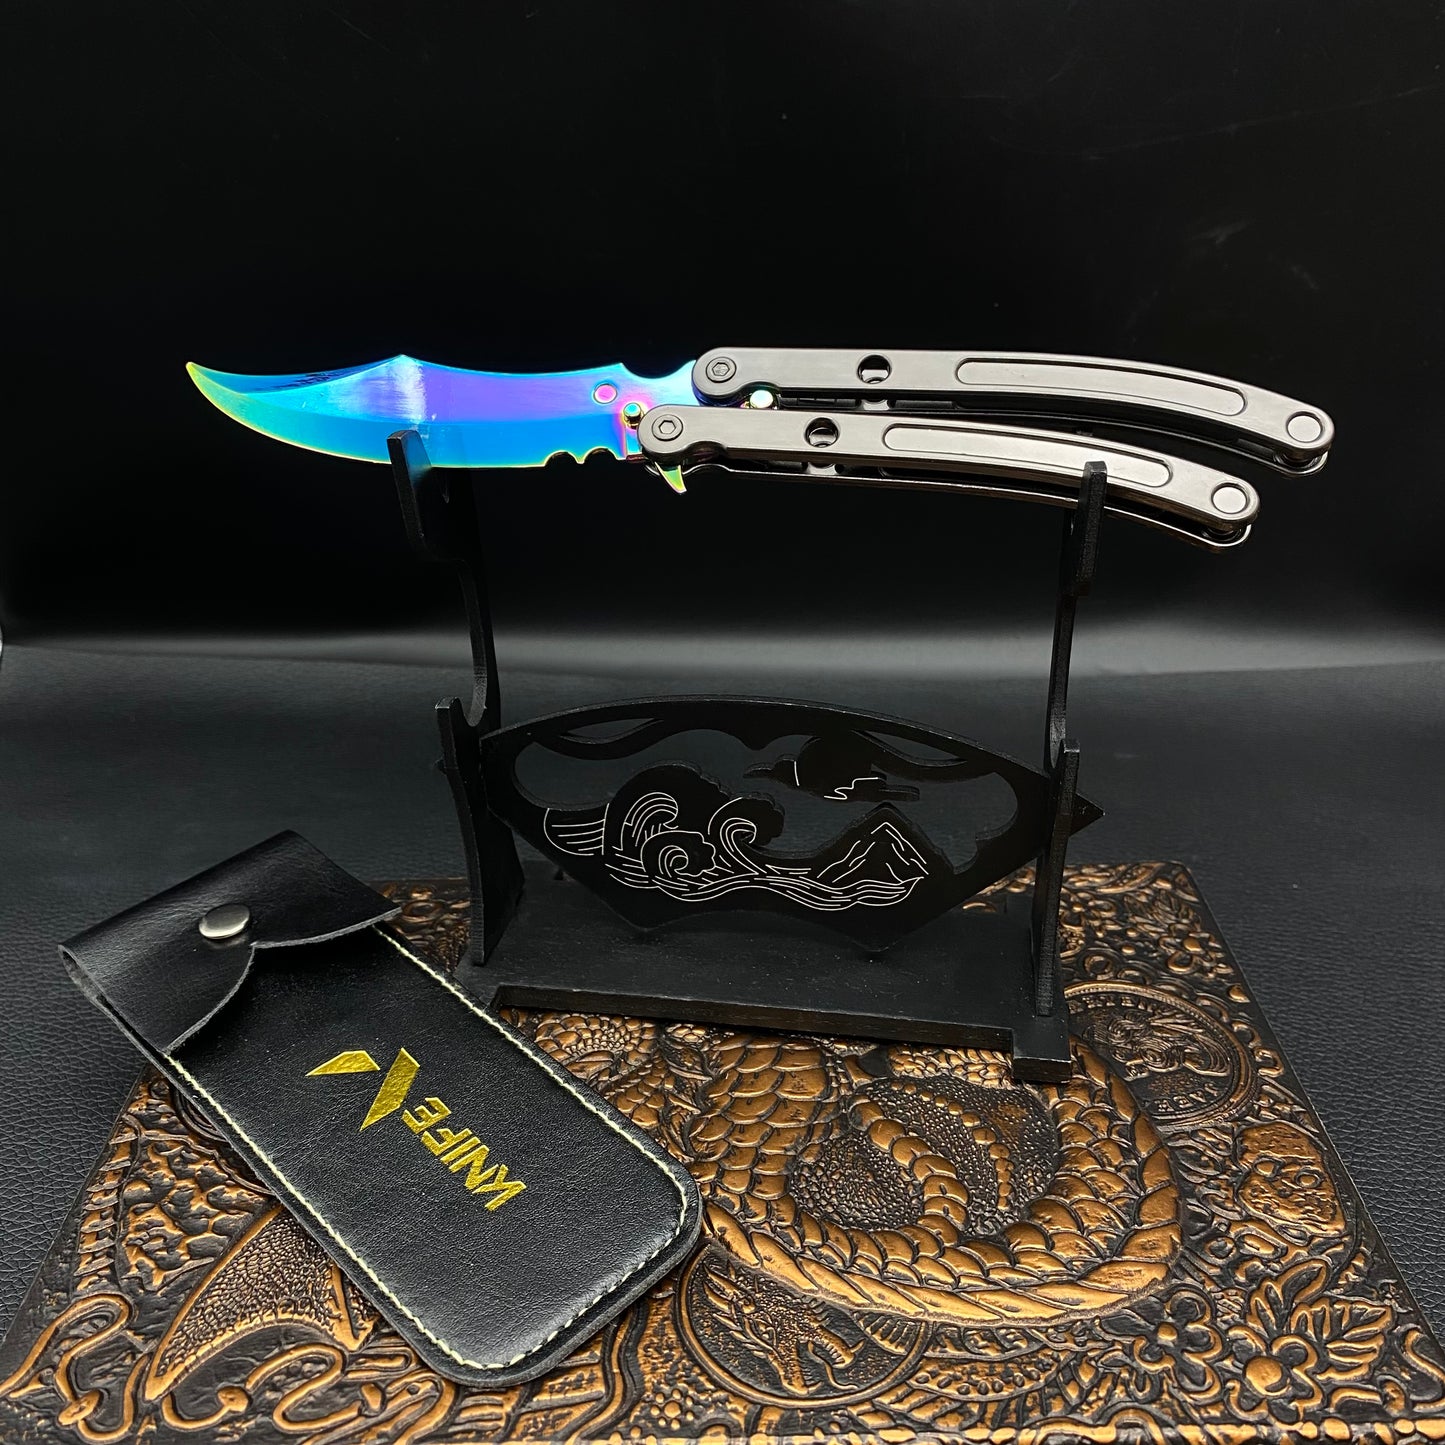 Metal Black Market Butterfly Knife Balisong Replica 2 In 1 Pack